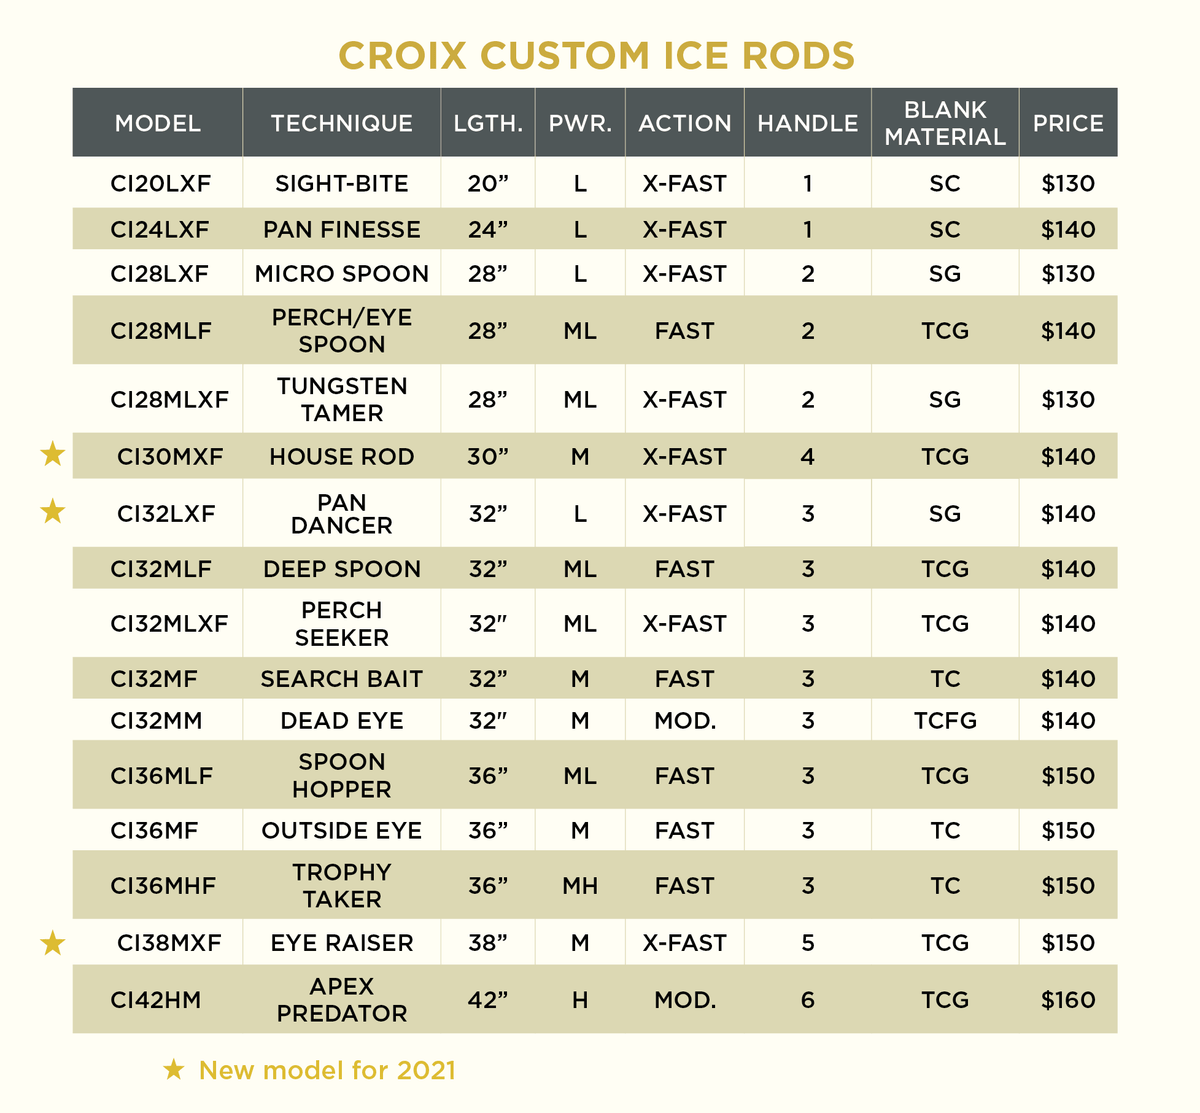 St. Croix Custom Ice Rods - LOTWSHQ